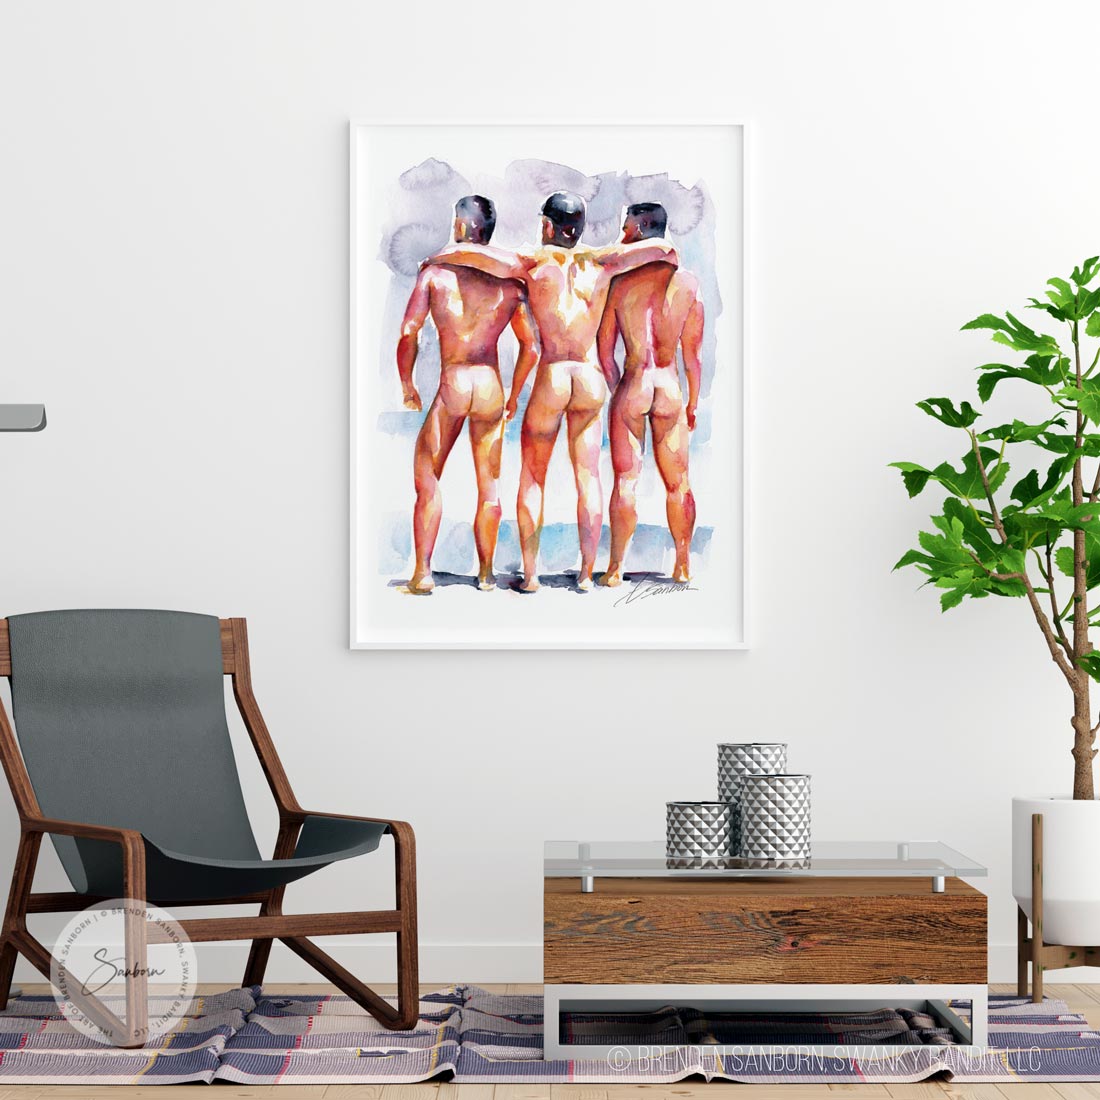 Three Muscular Men on the Beach at Sunset - Giclee Art Print